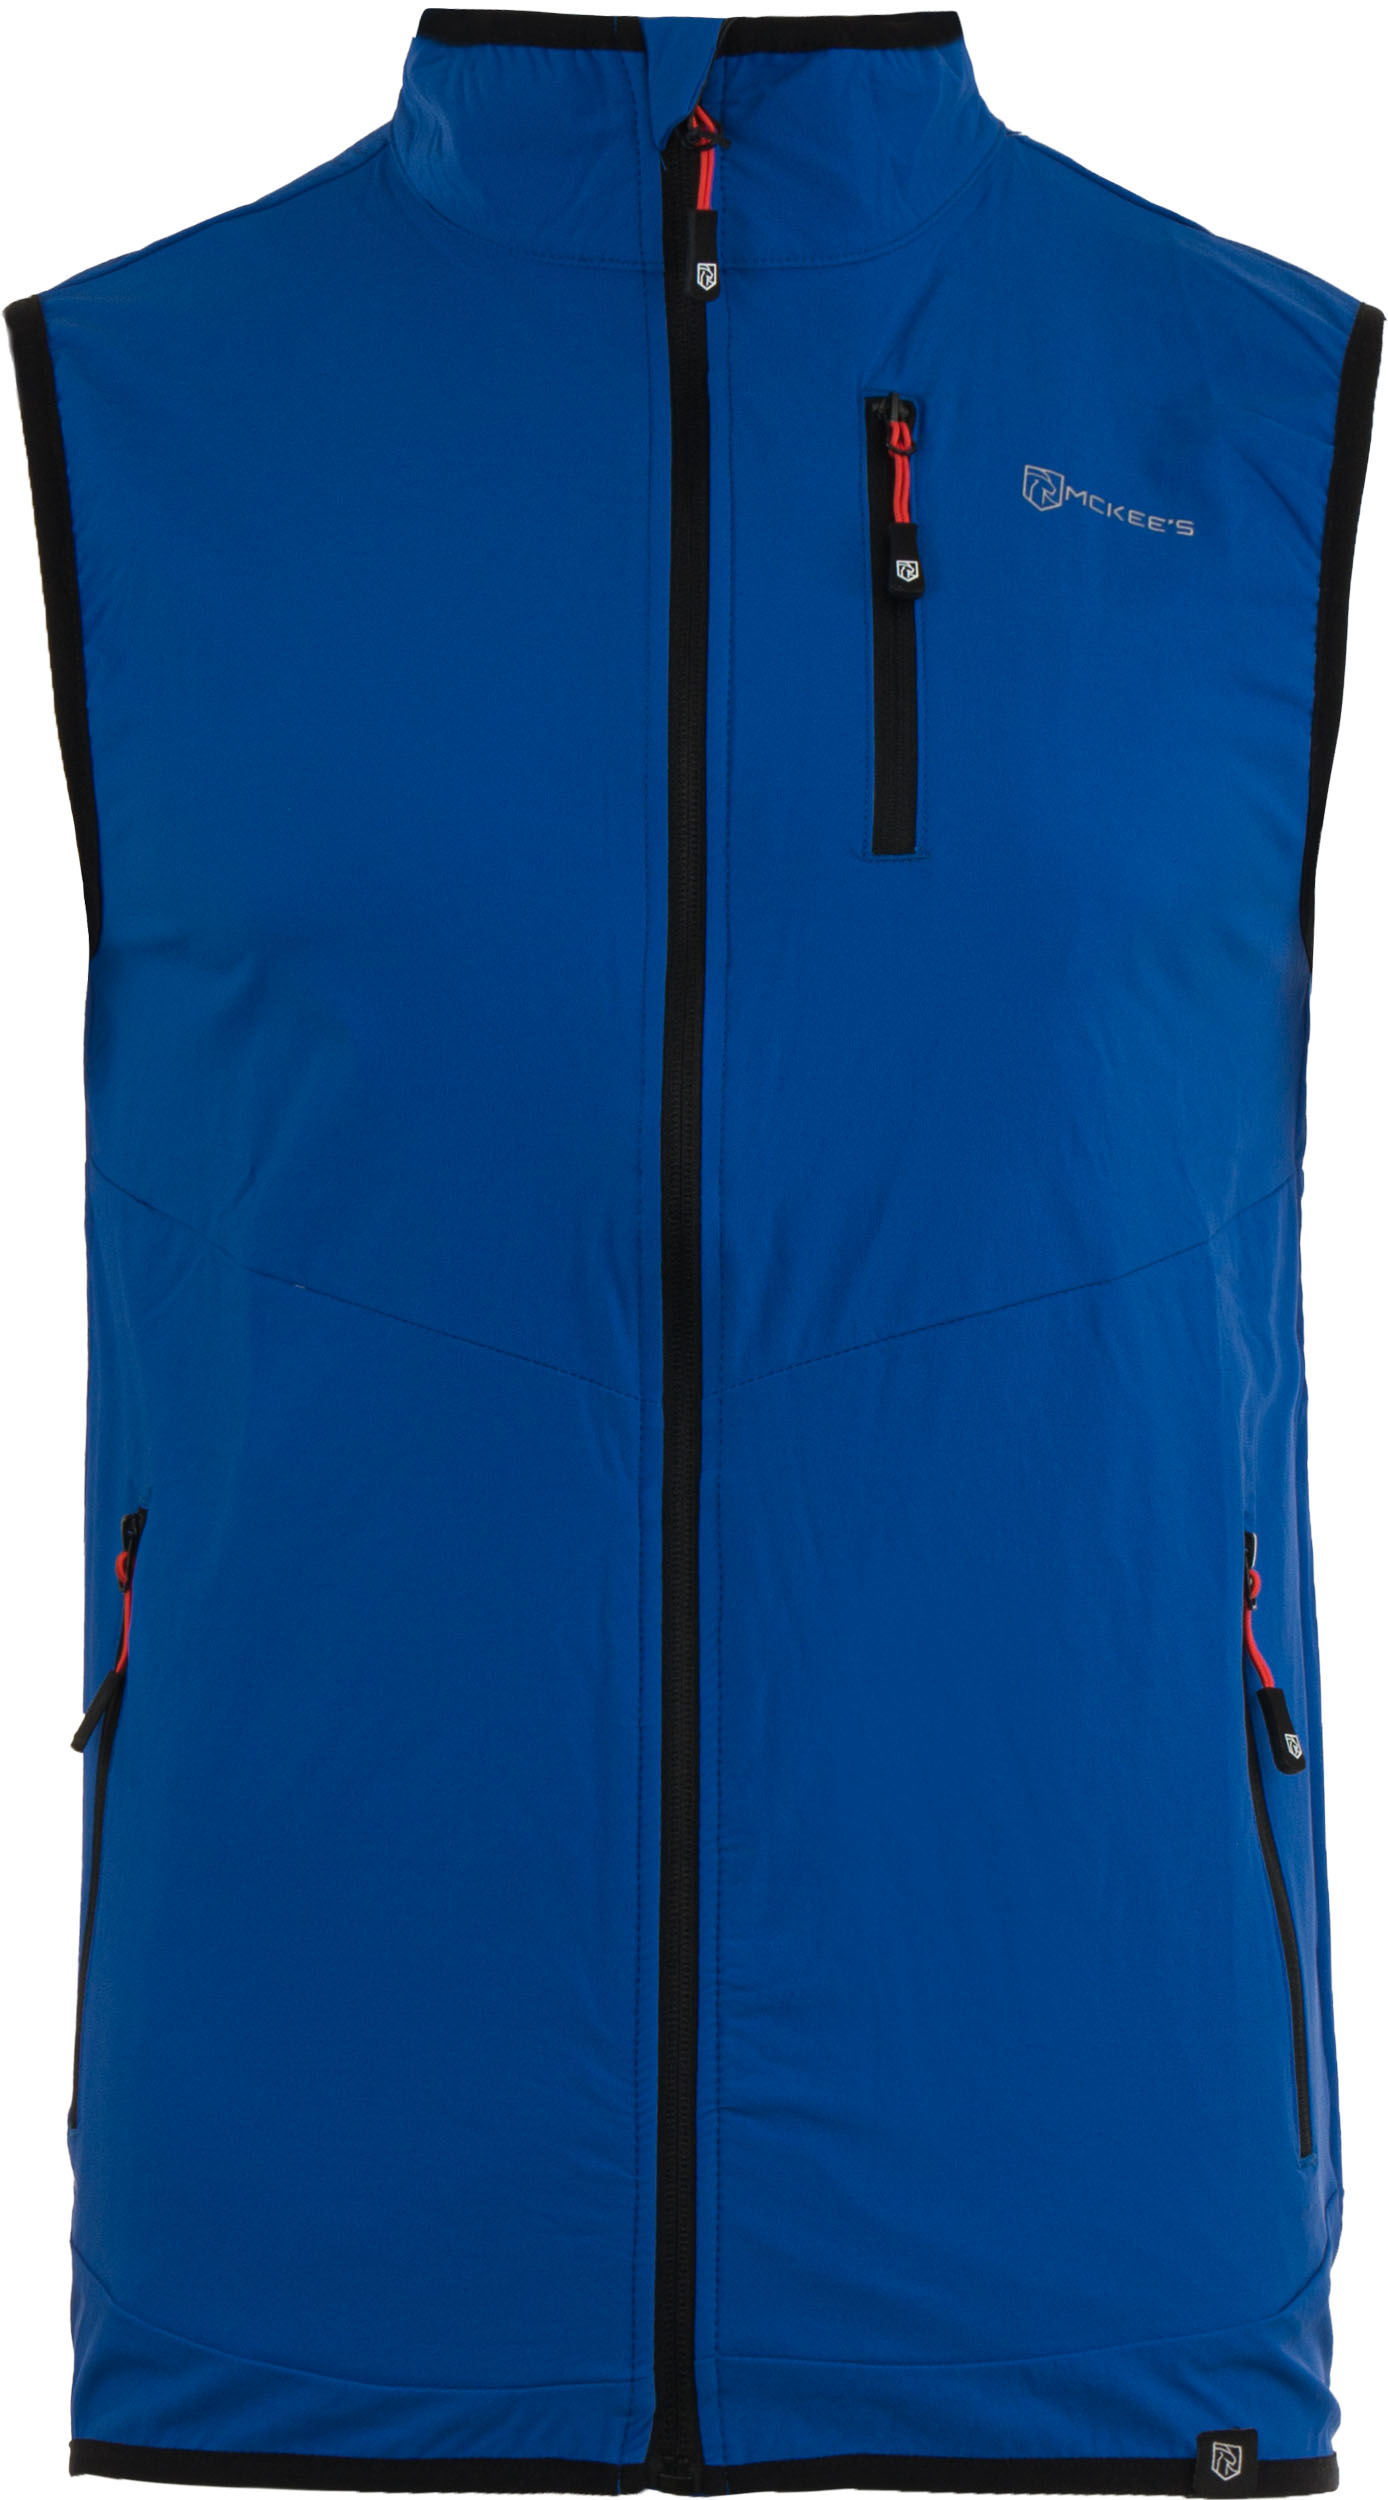 Pánská vesta Mckees Callangate royal blue|L